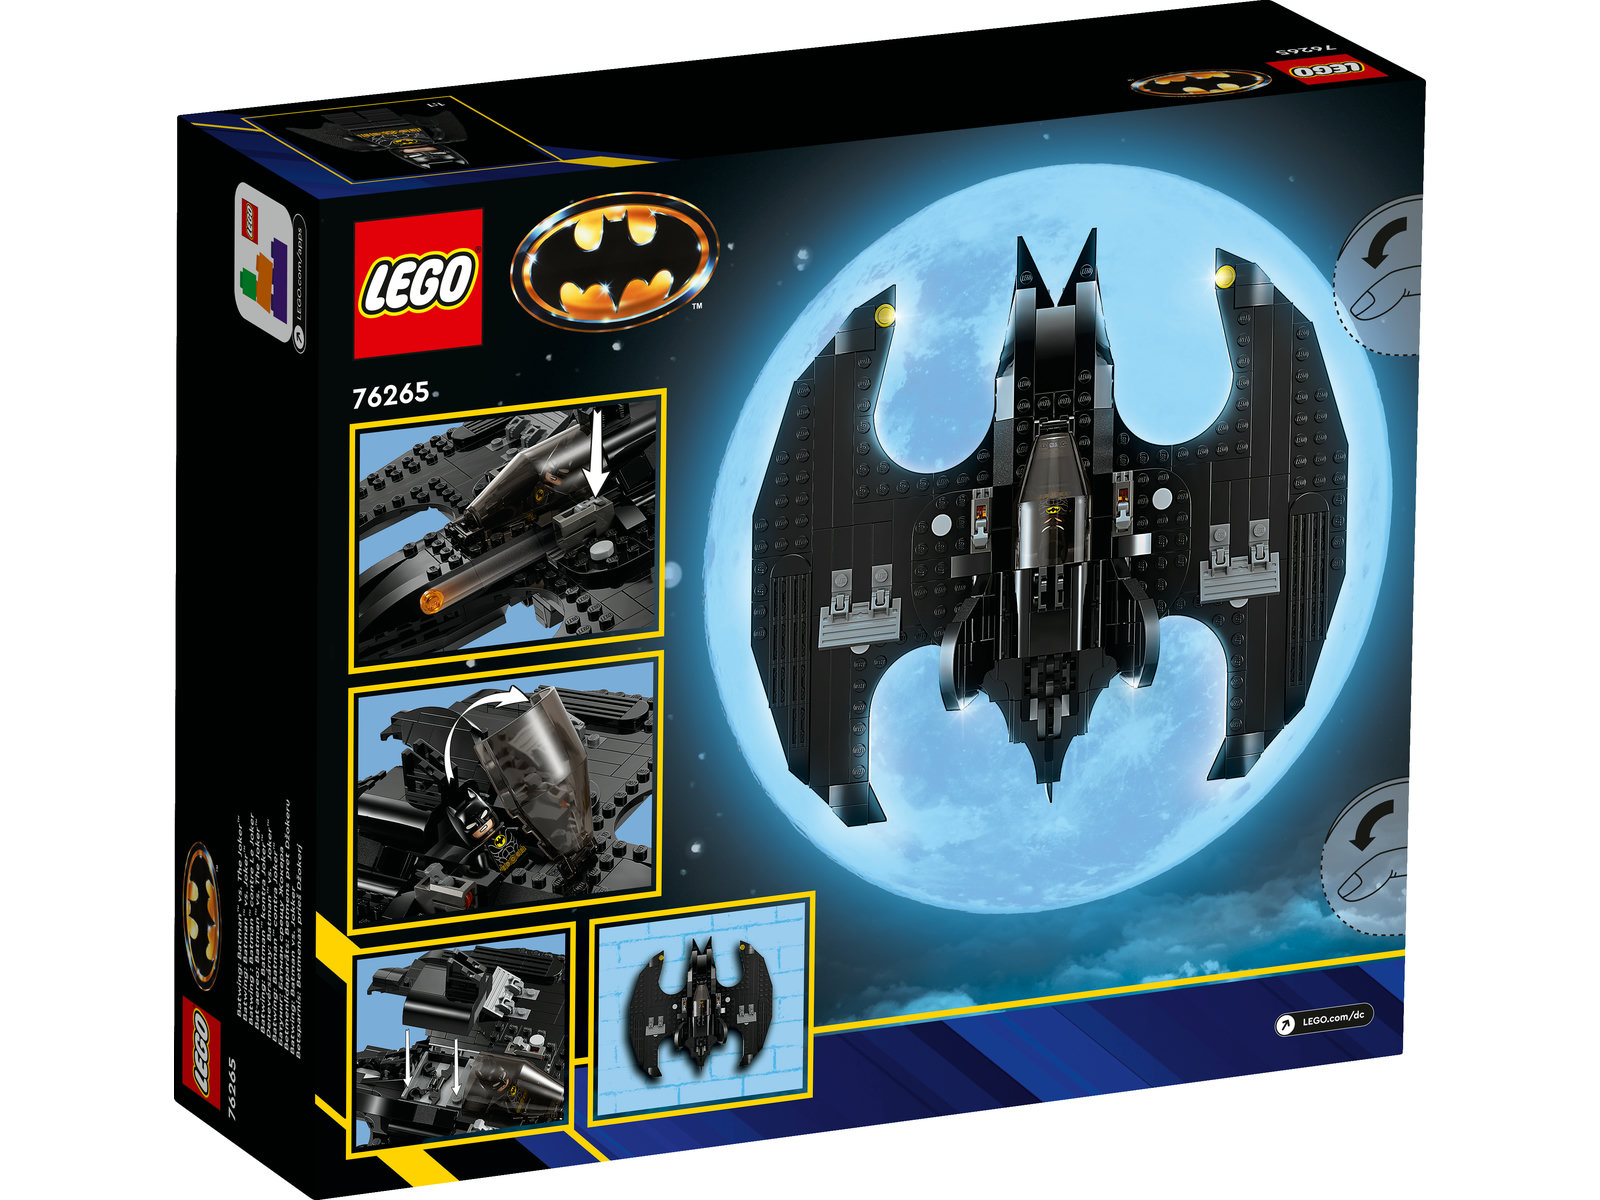 LEGO® DC 76265 - Batwing: Batman™ vs. Joker™